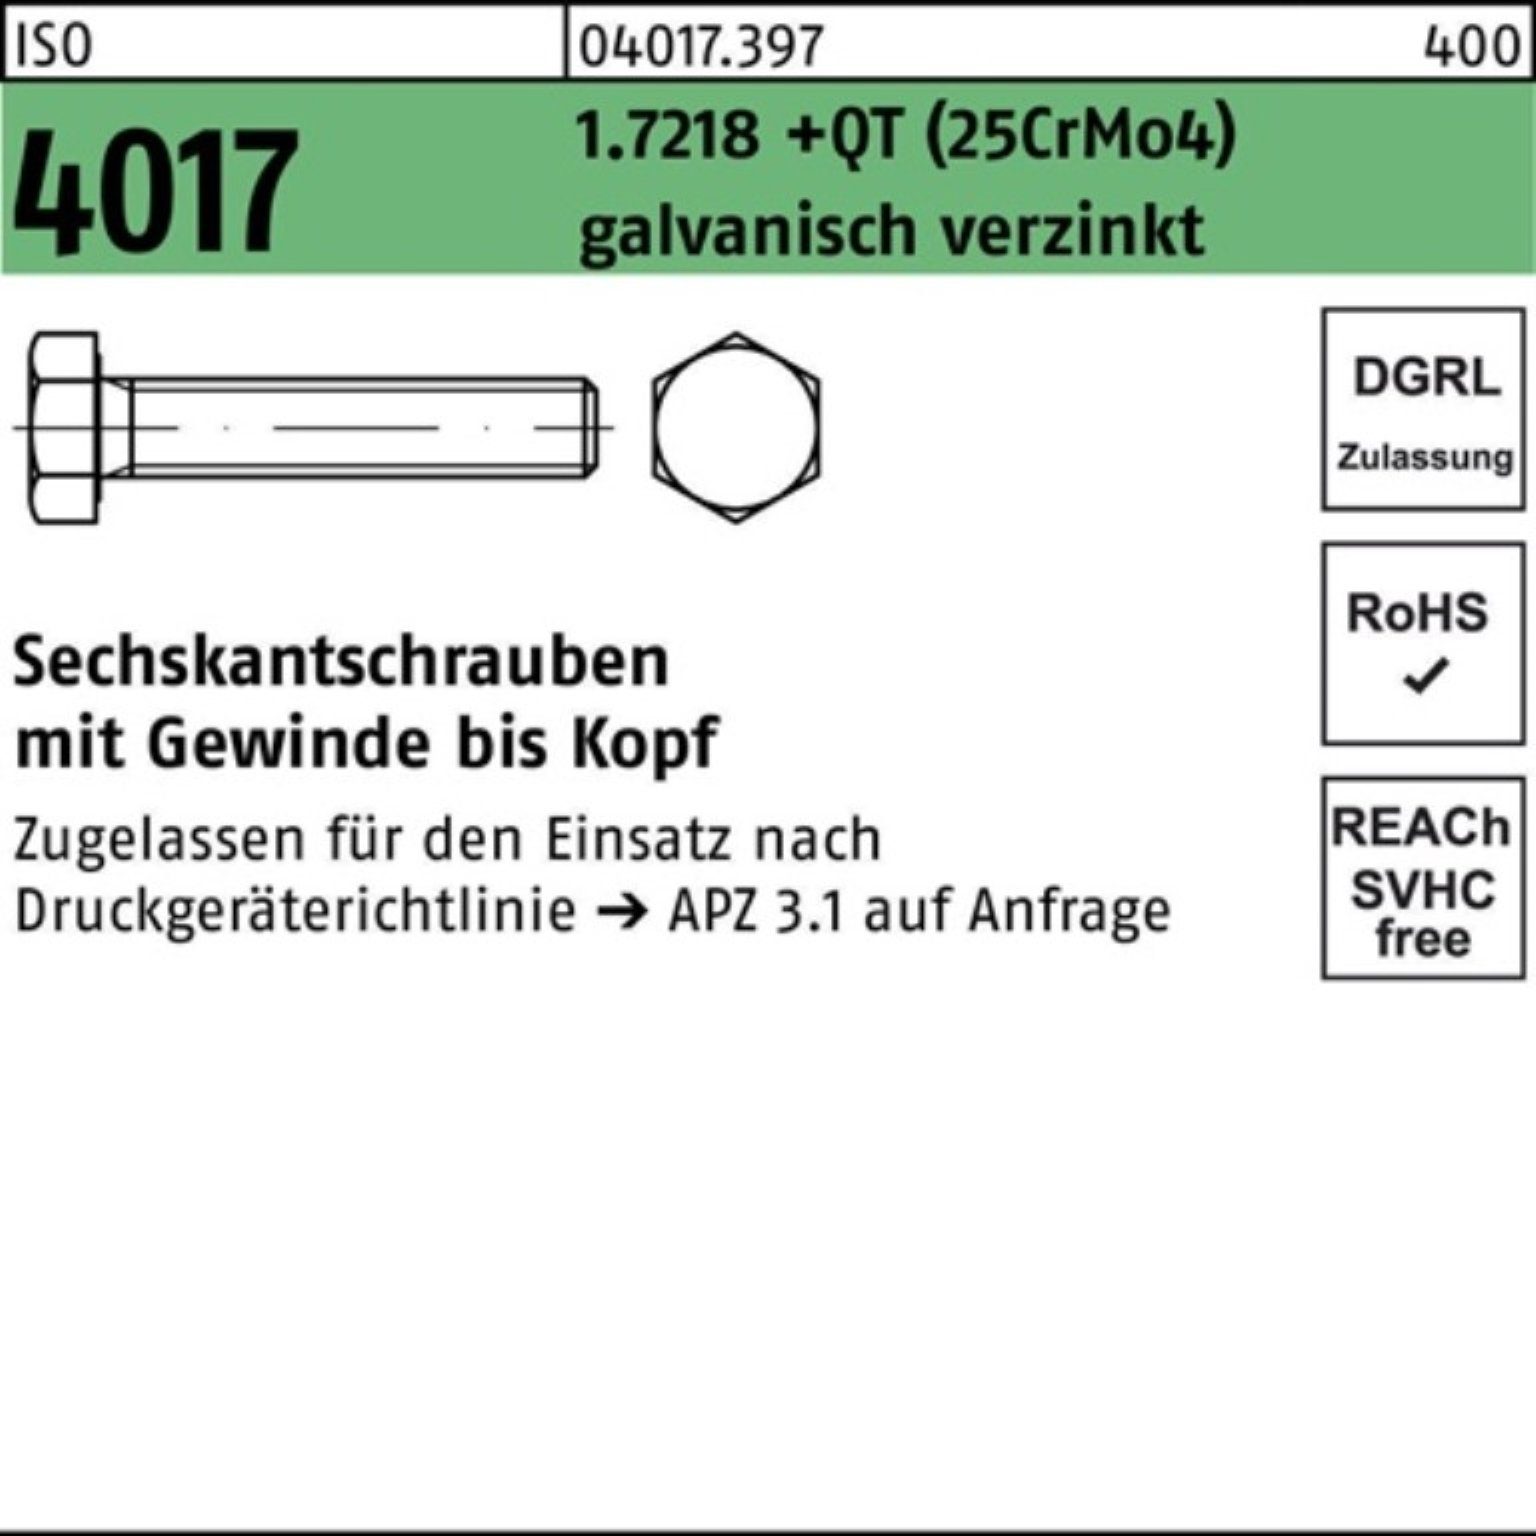 Sechskantschraube M12x45 100er (25CrMo4) VG 4017 g Sechskantschraube ISO 1.7218 Bufab Pack +QT